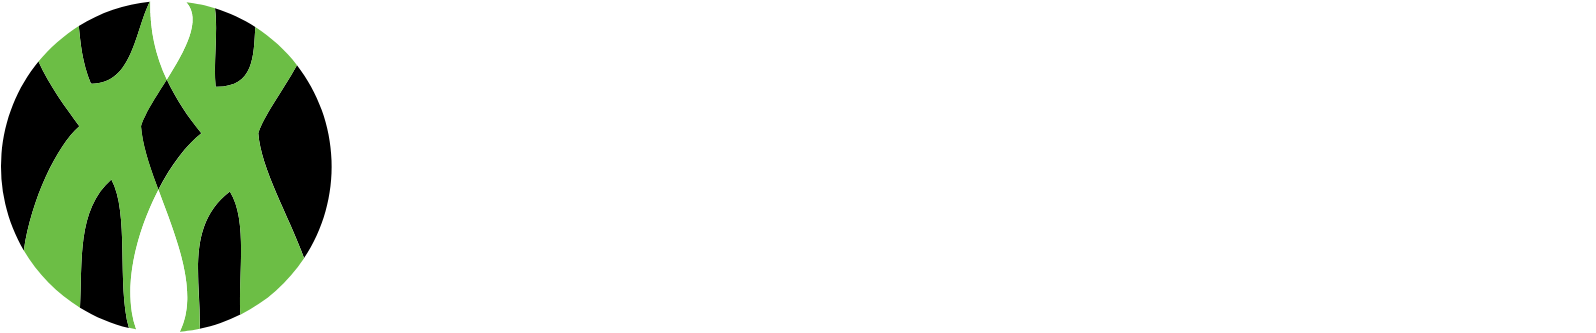 Personalis logo large for dark backgrounds (transparent PNG)